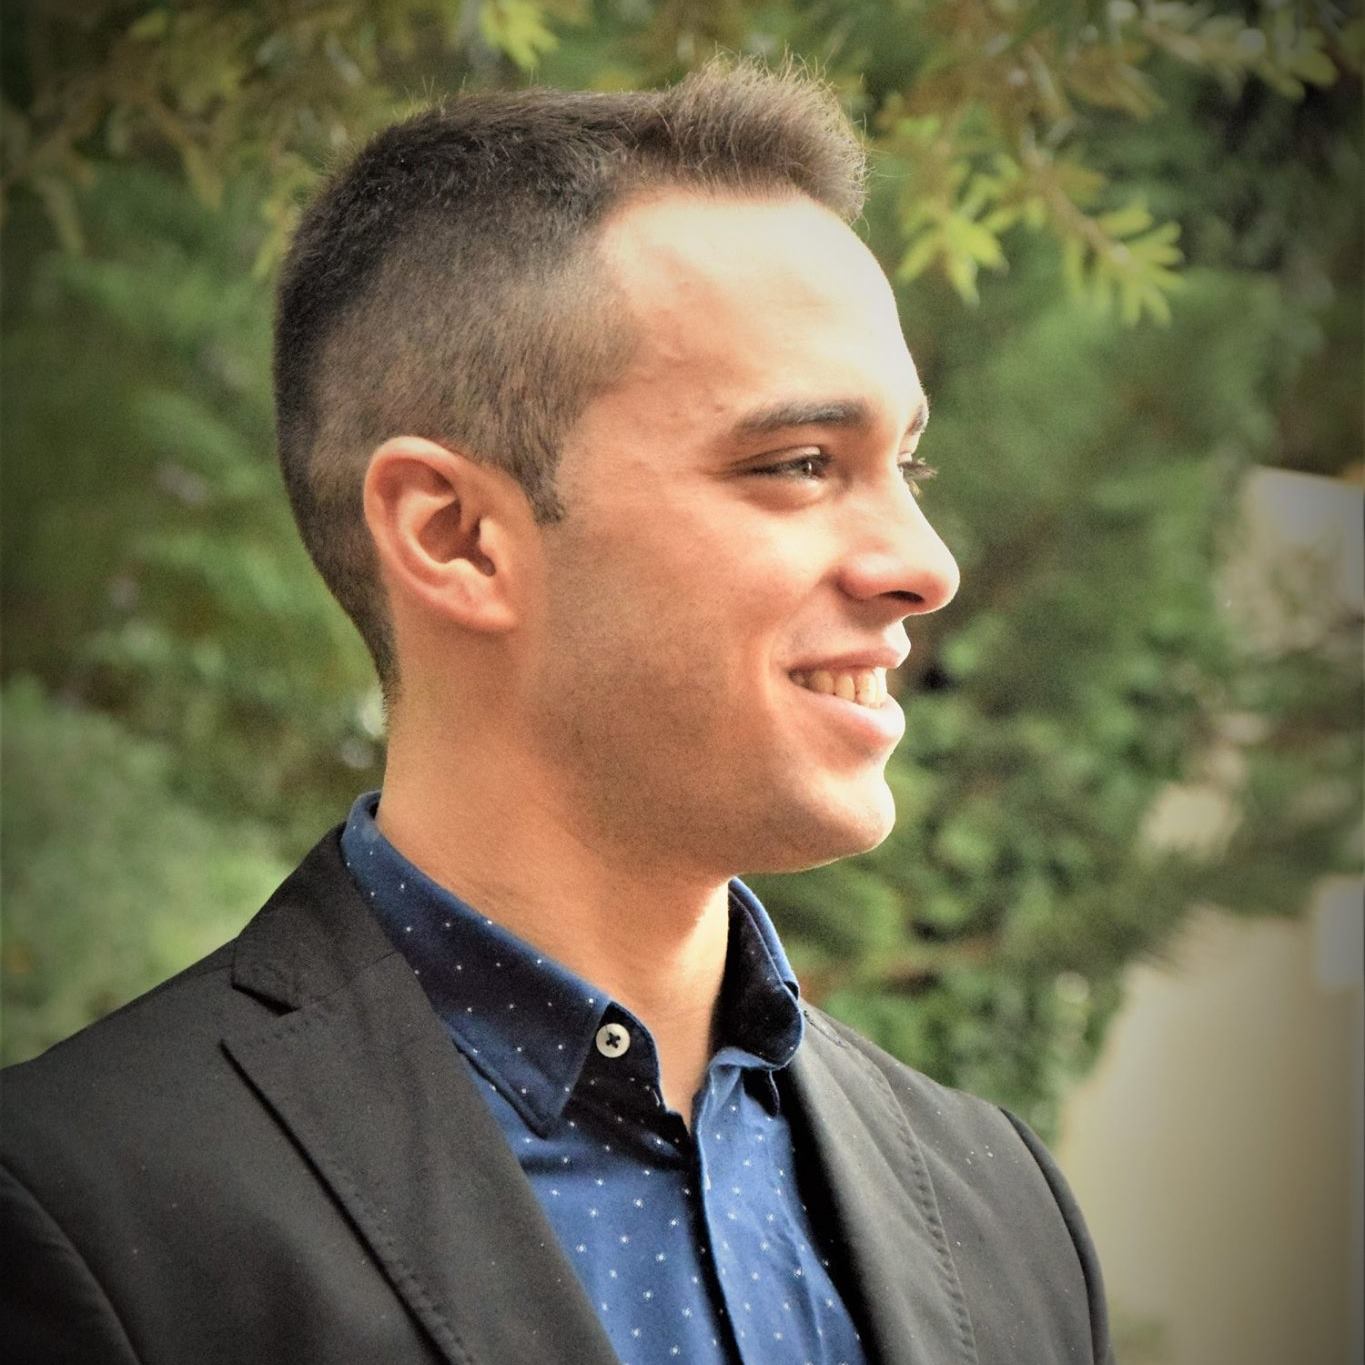 You are currently viewing Μπ. Γριβοκωστόπουλος: Οι νέοι δεν είναι παθητικοί πολίτες, απαιτούν σχέσεις ειλικρίνειας με την πολιτική